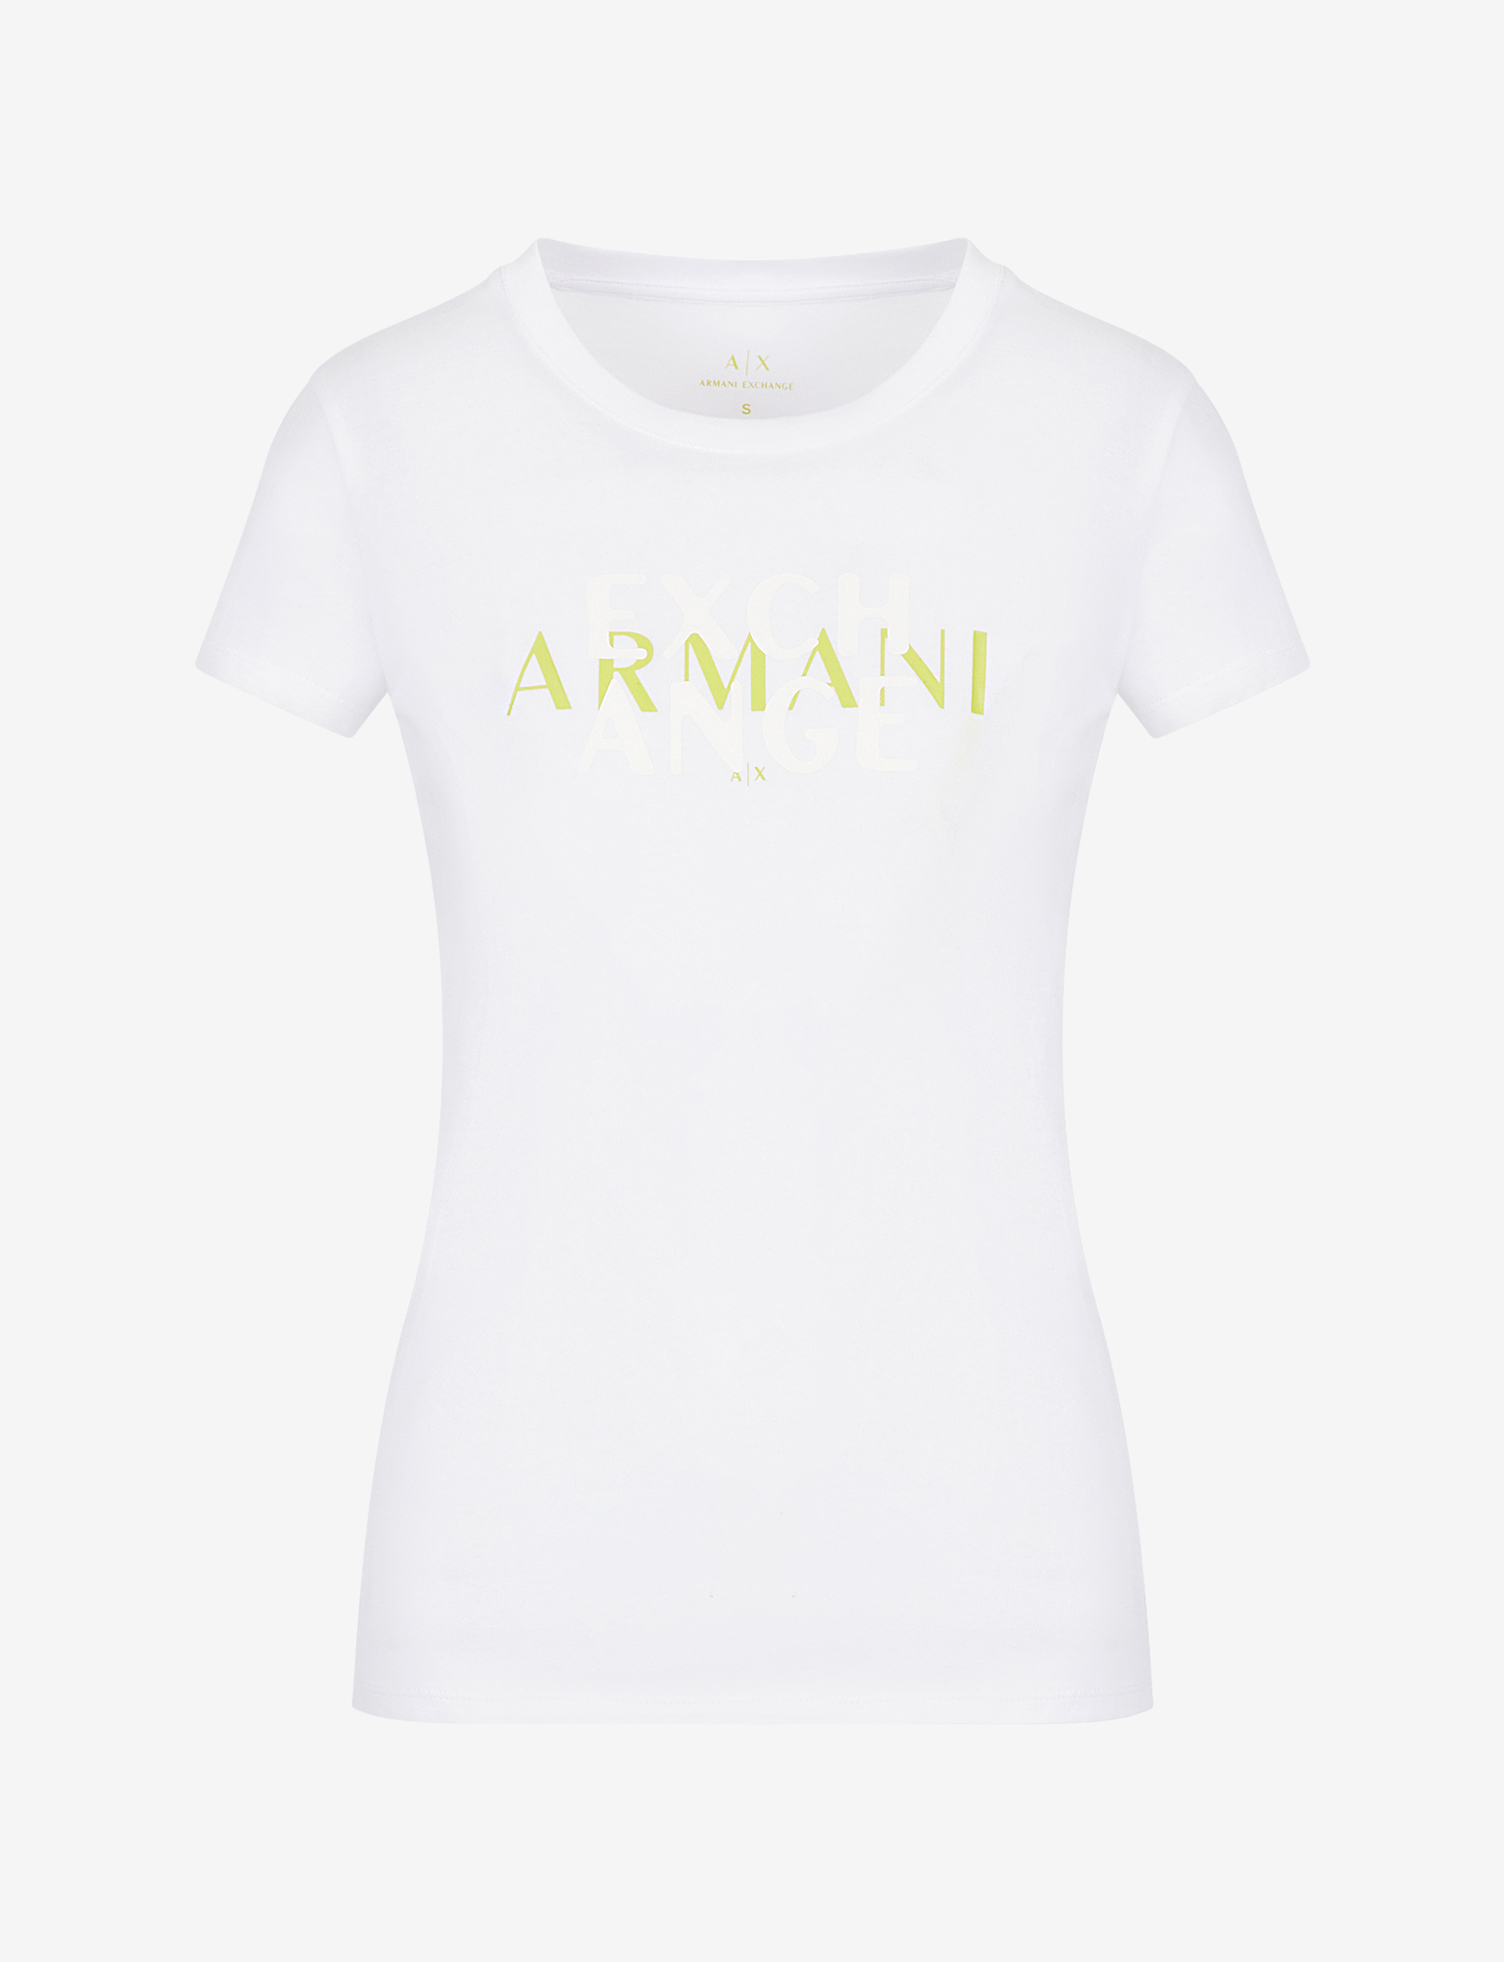 ARMANI 3RYTCC YJG3Z Damen T-Shirt LOGO Weiß.